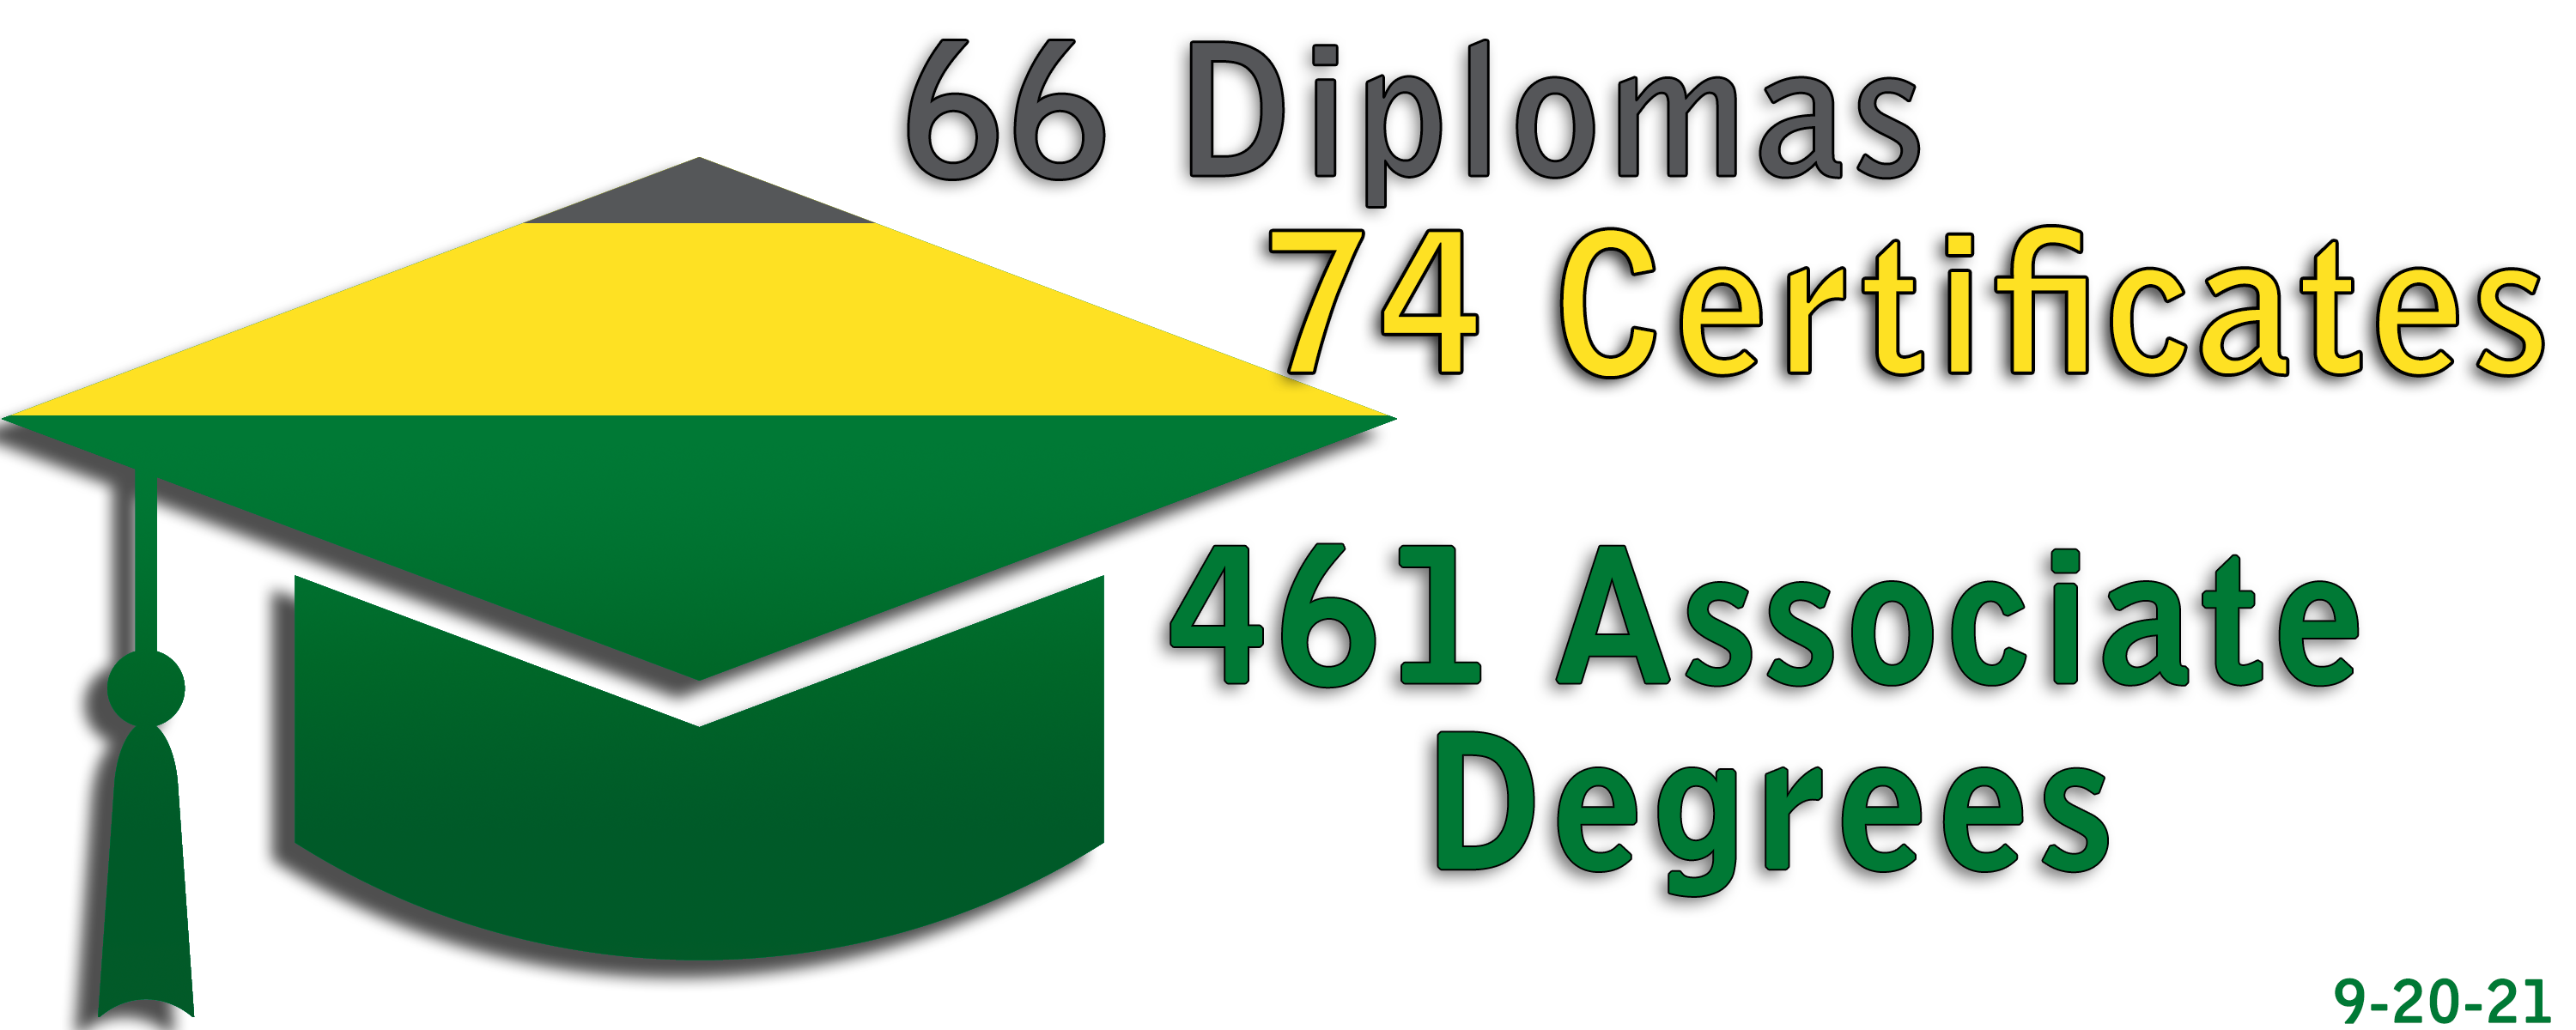 Green and yellow graduation cap - 66 Diplomas, 74 Certificates, 461 Associate Degrees